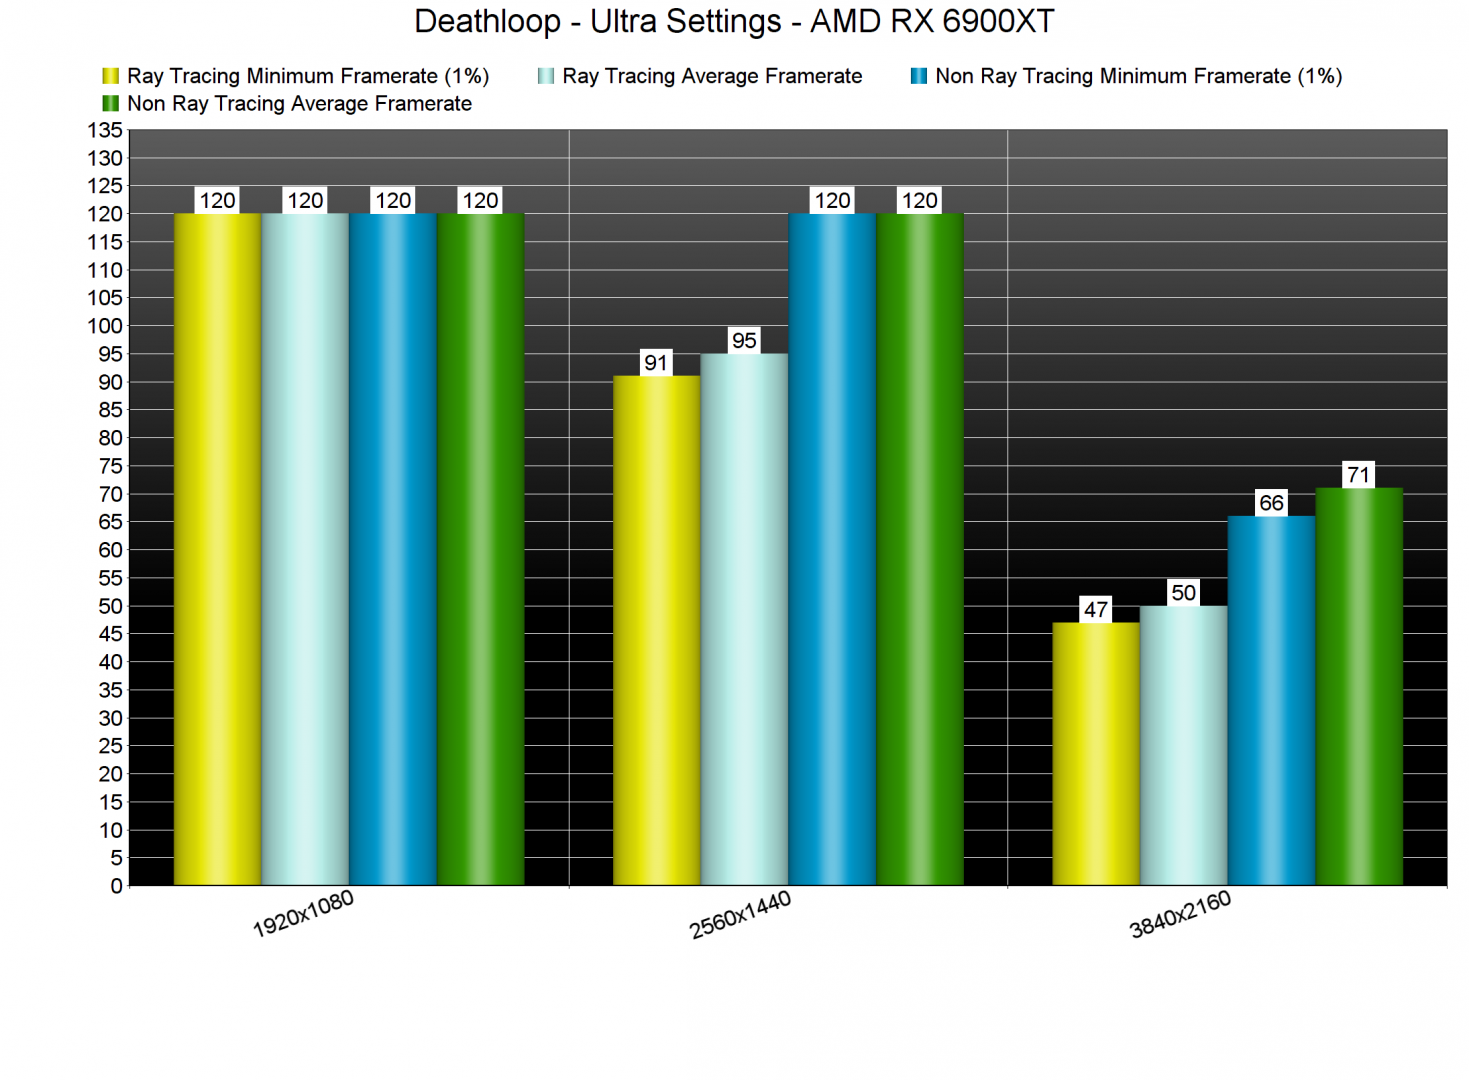 Deathloop fixed benchmarks for AMD RX 6900XT